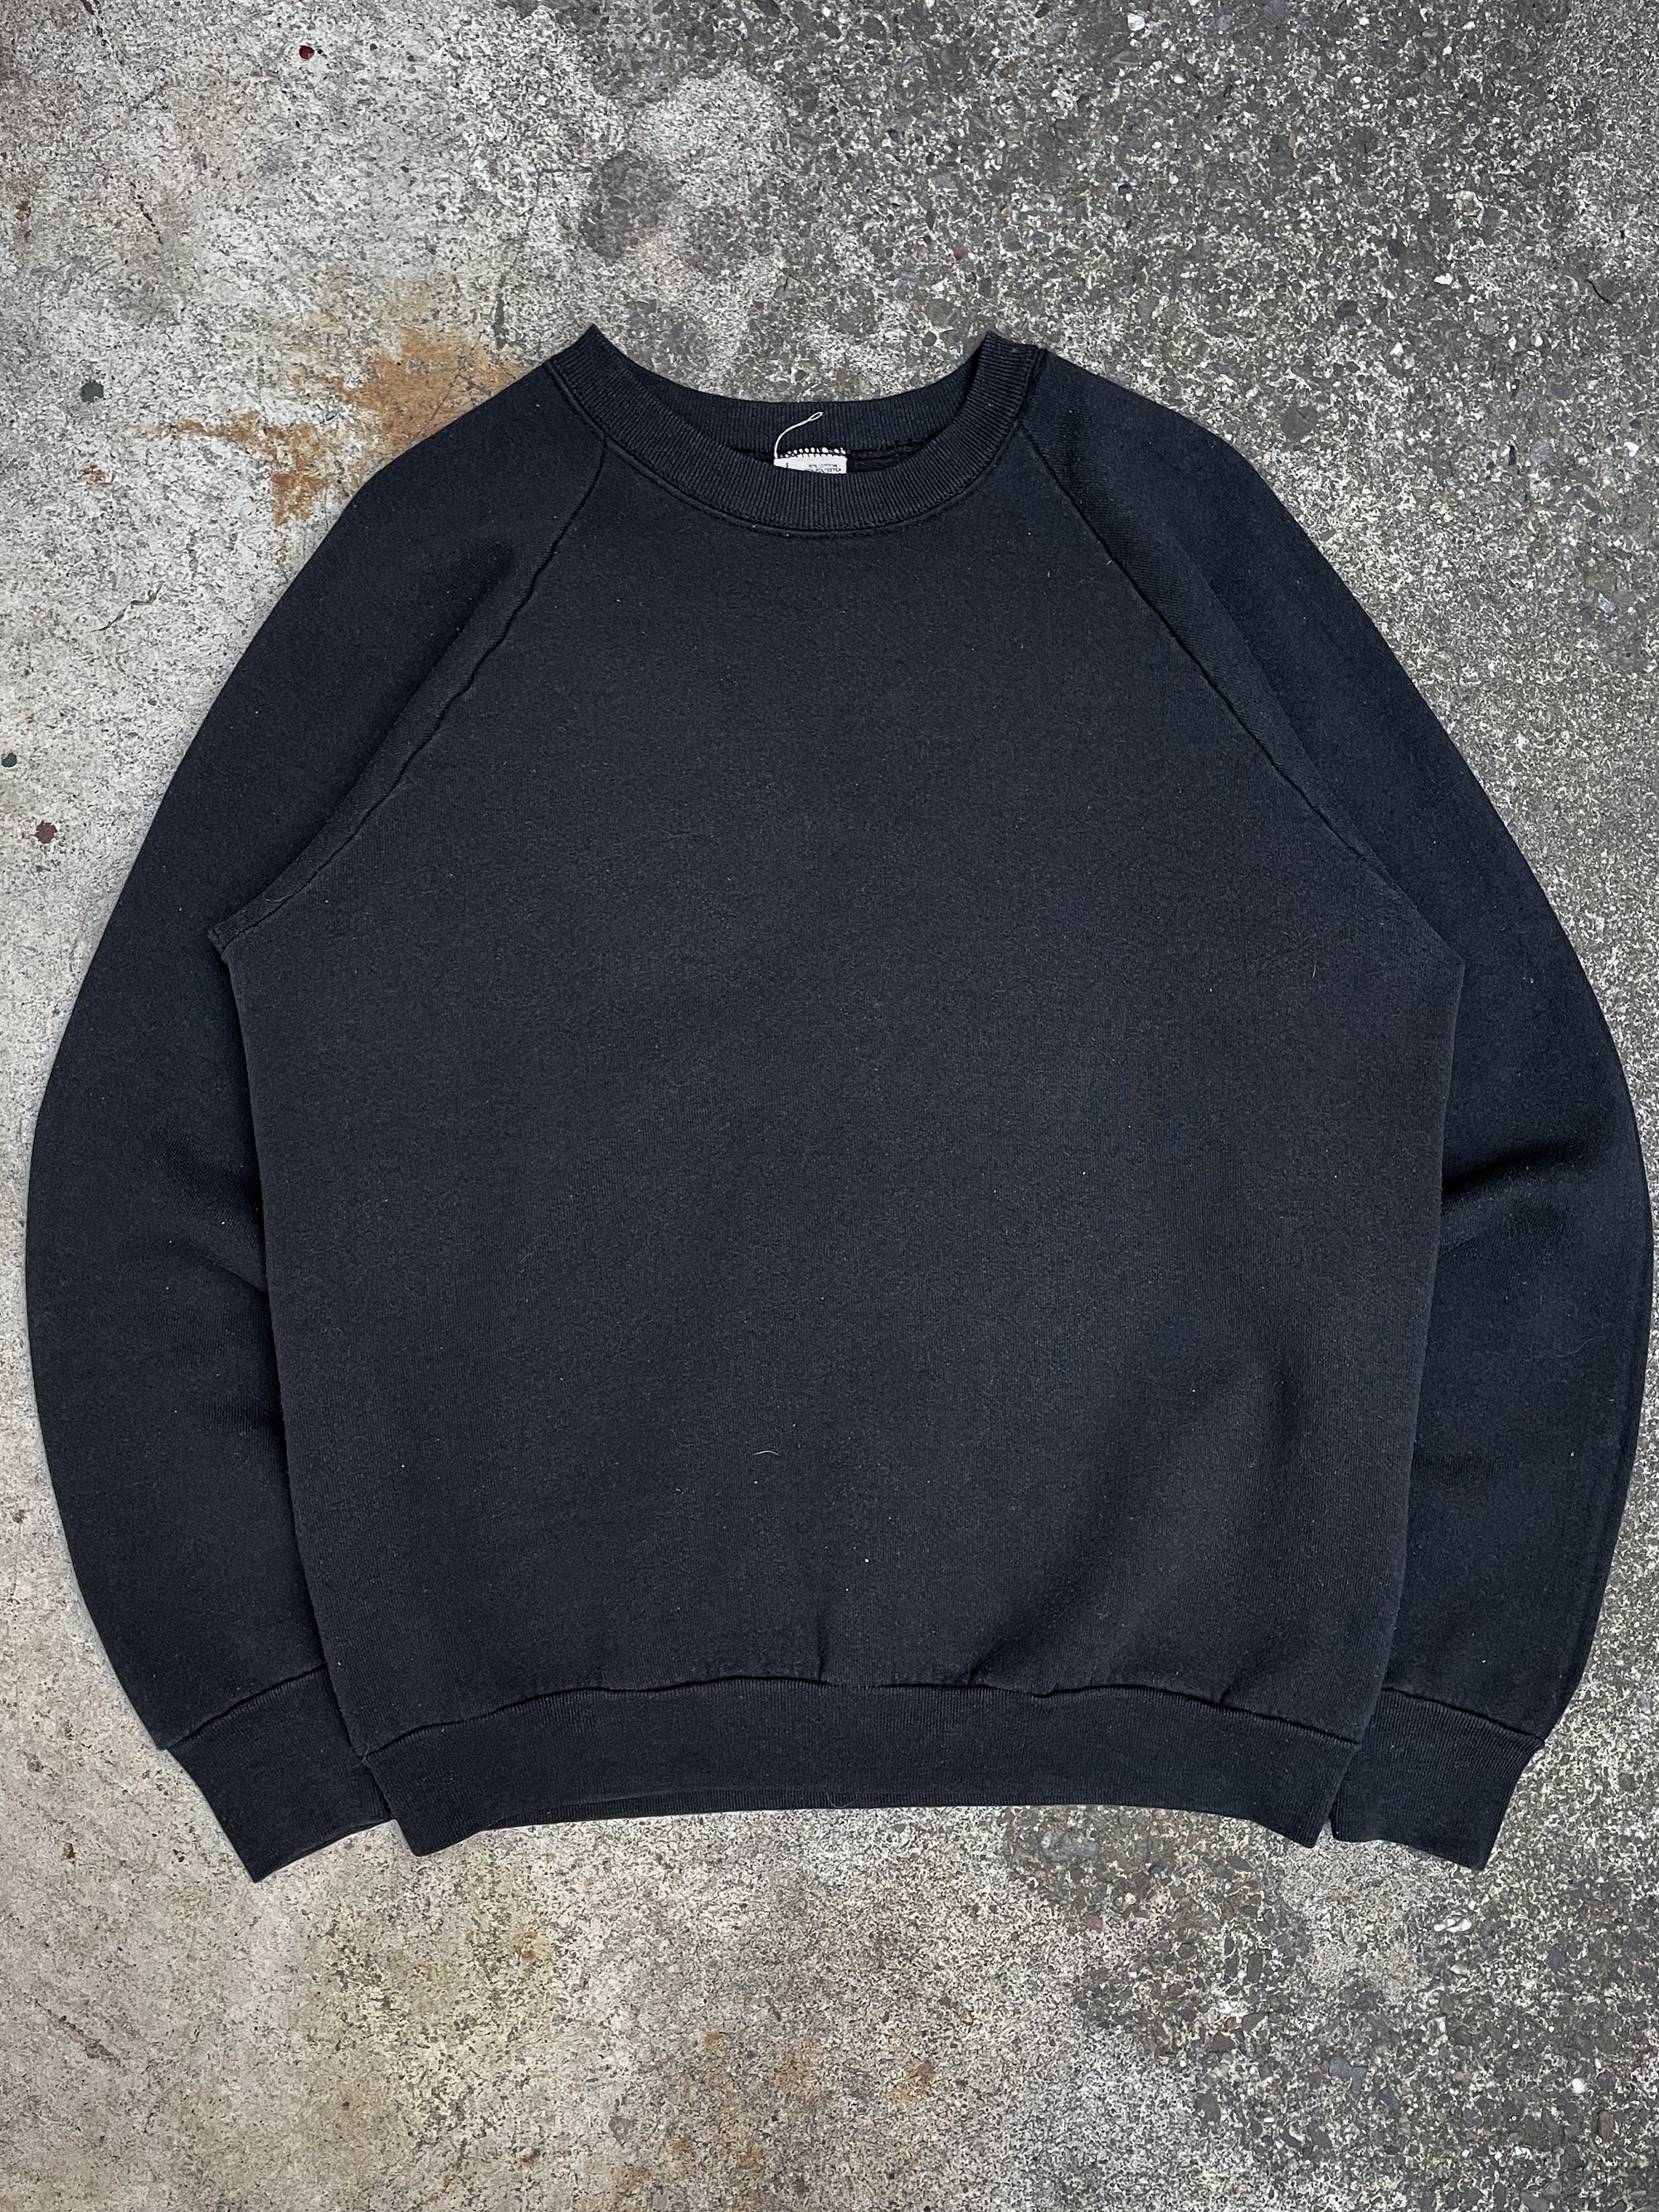 1990s Black Blank Raglan Sweatshirt (M)